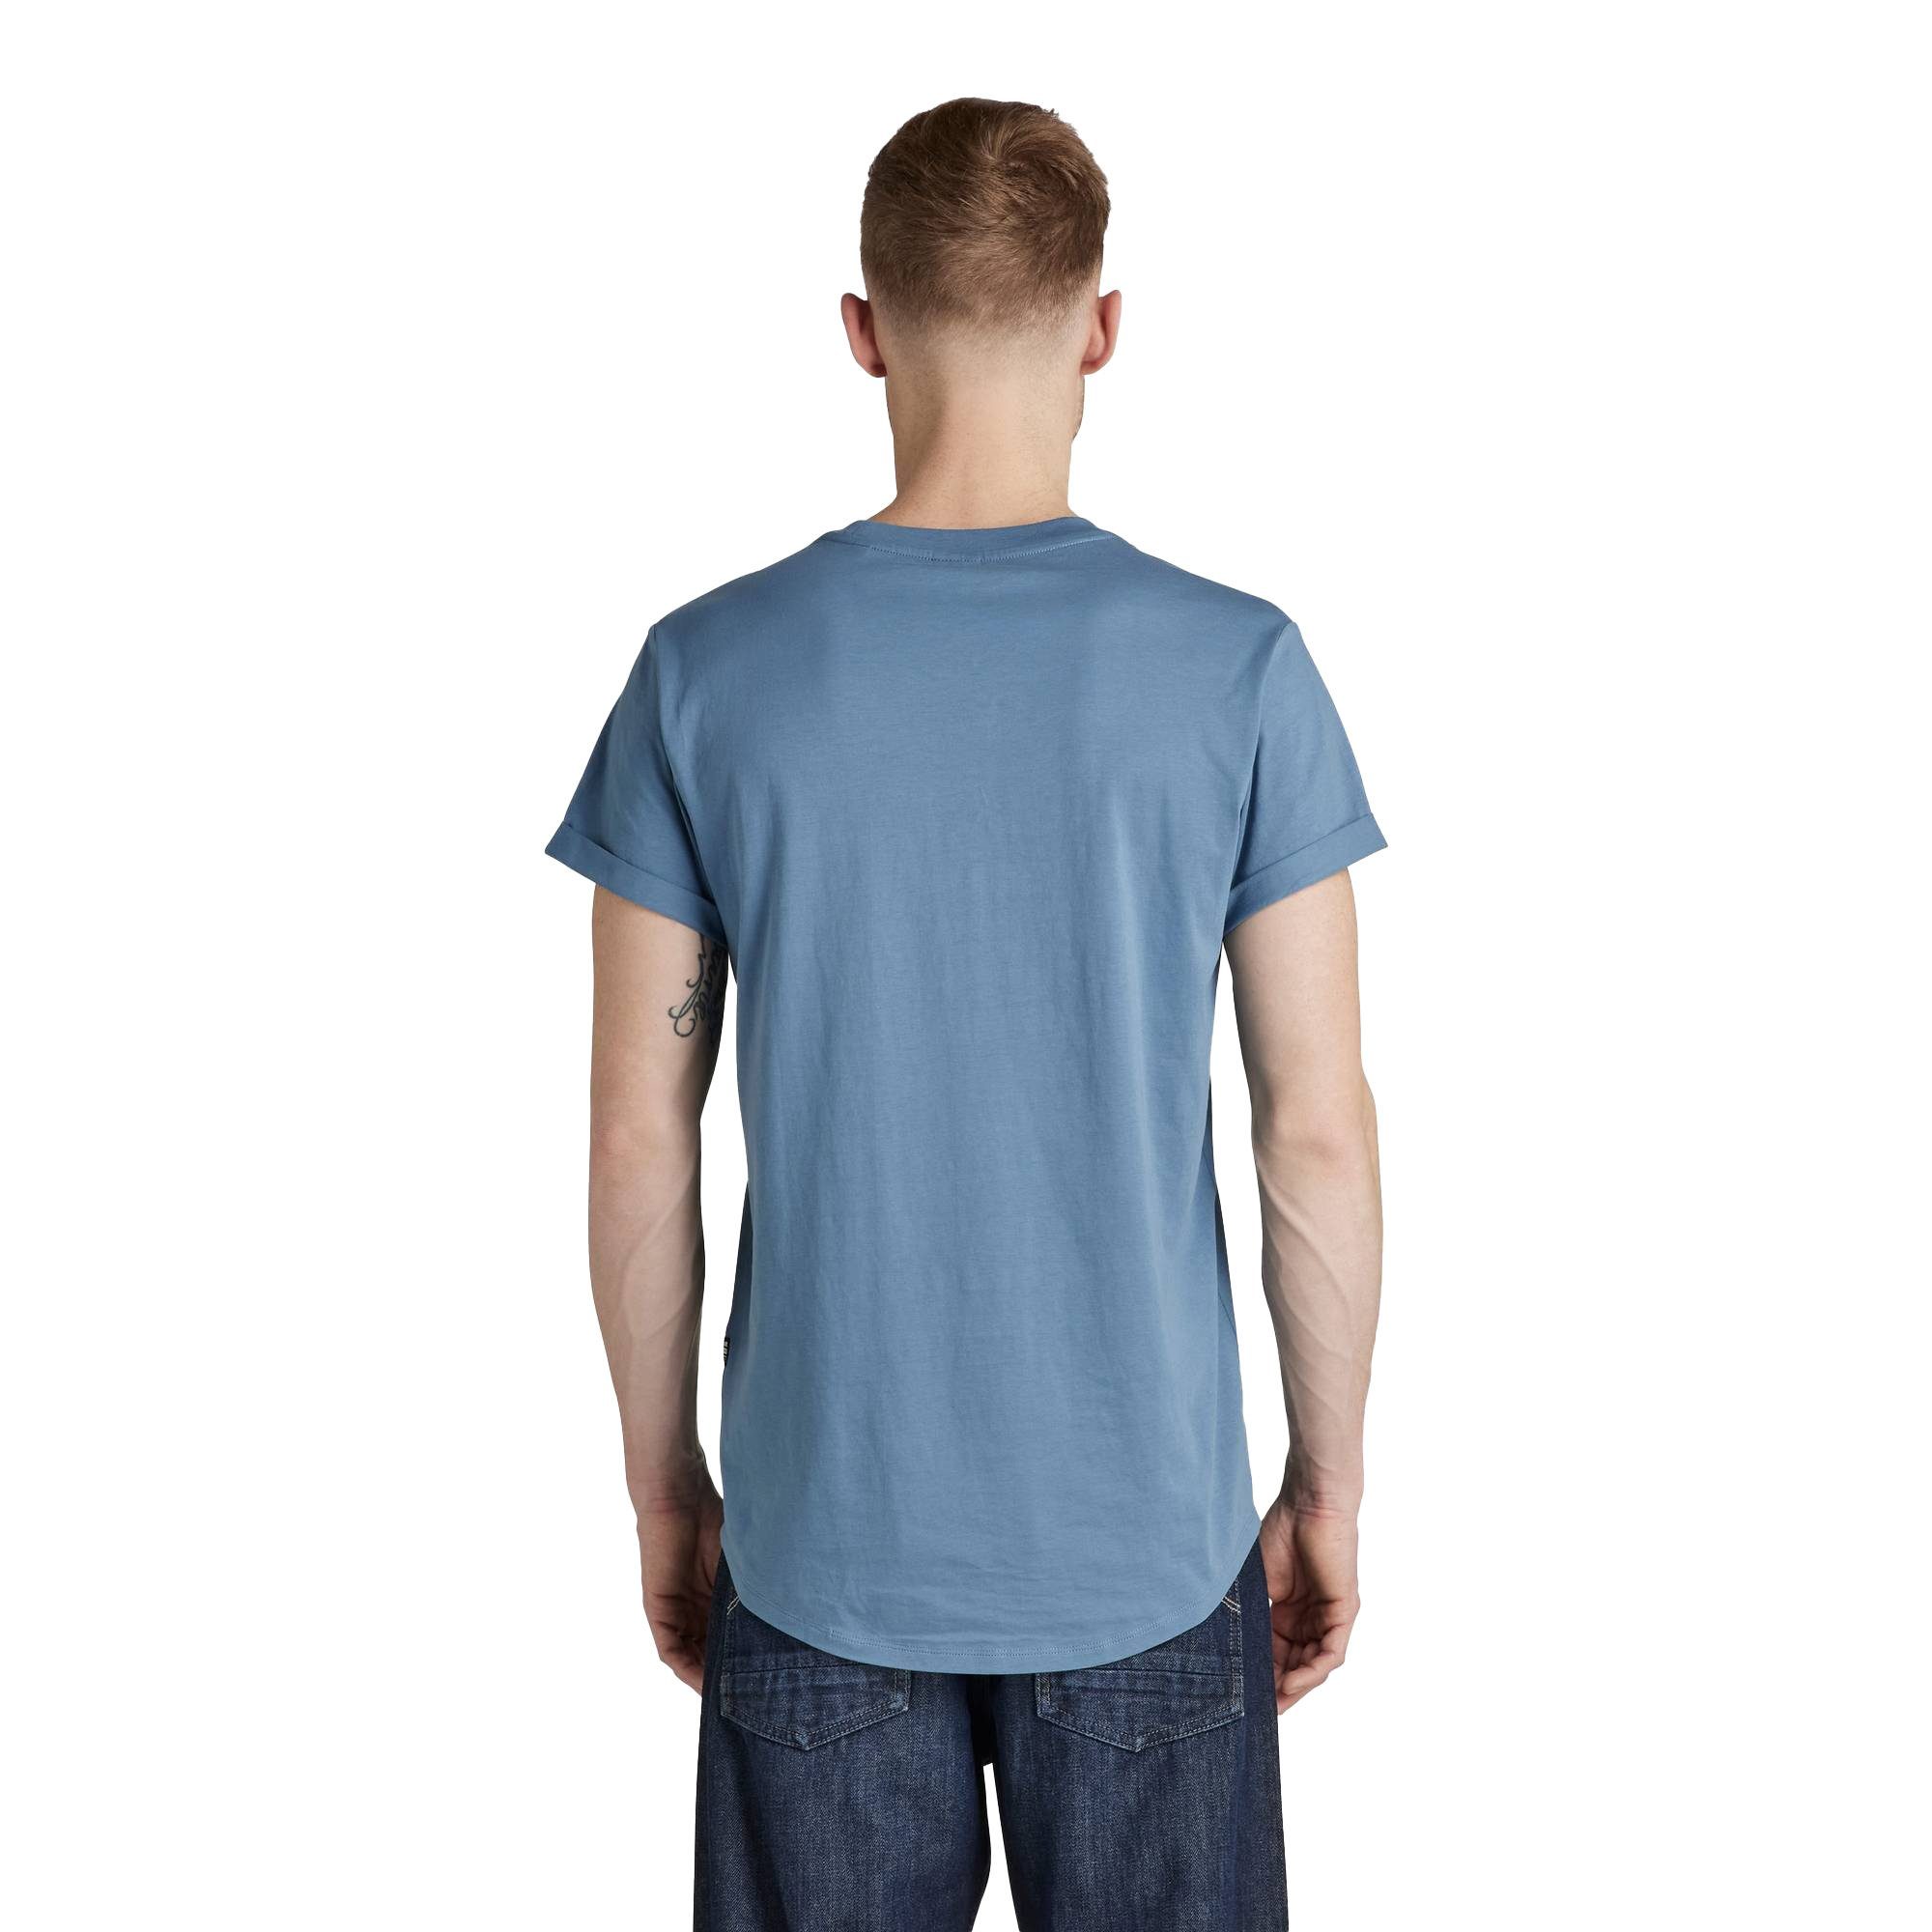 G-Star RAW T-Shirt Cotton - Organic T-Shirt Lash, Herren Hellblau Rundhals